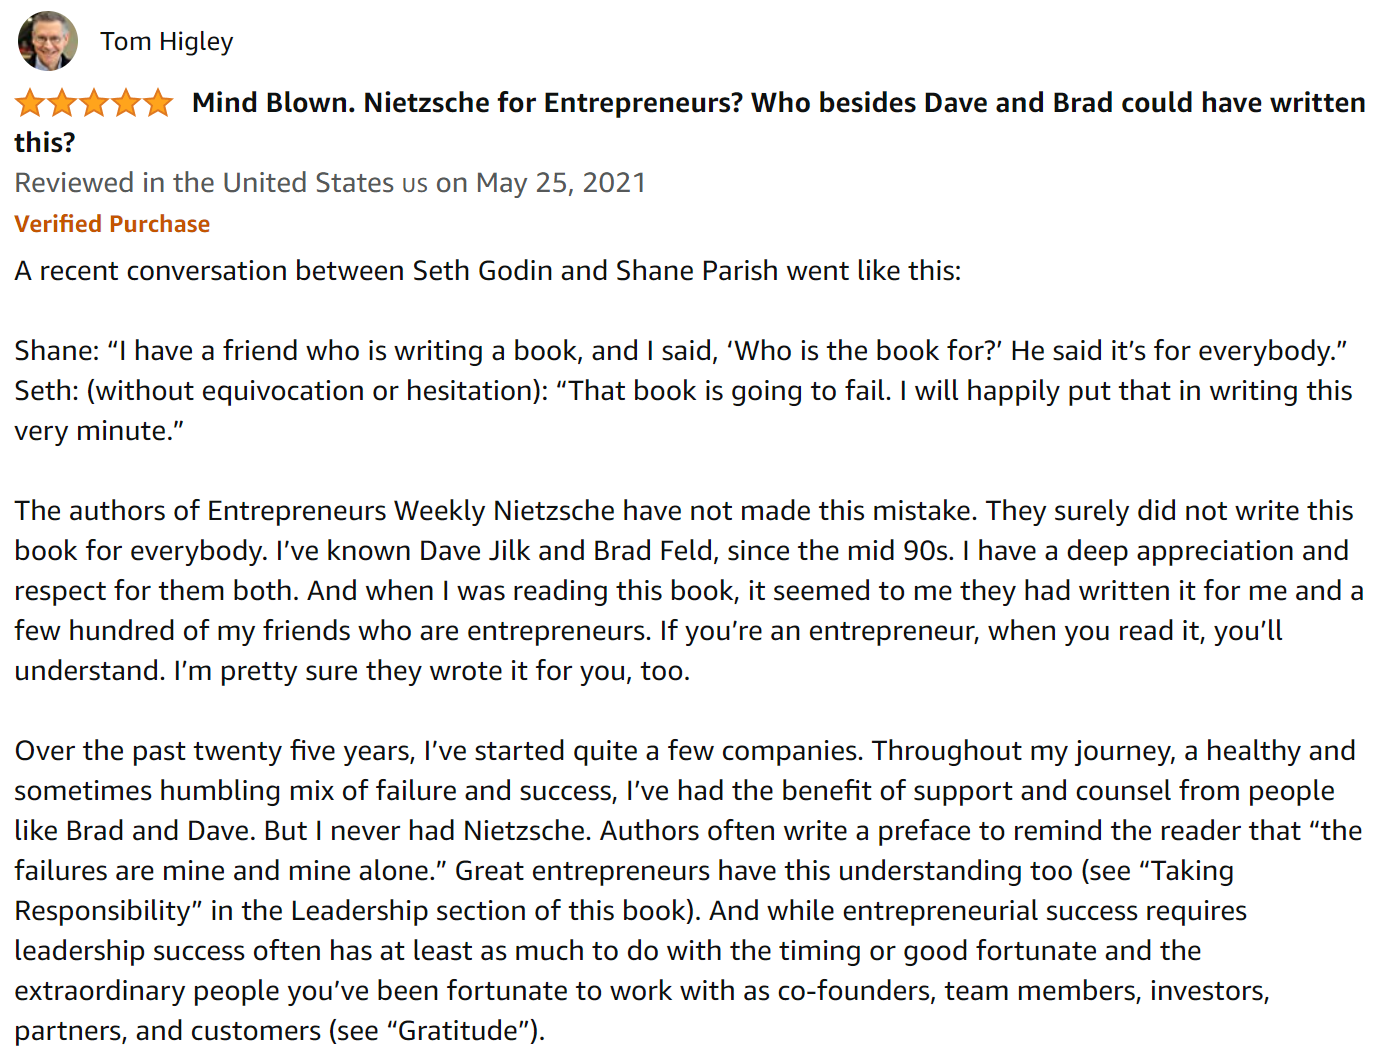 The Entrepreneur's Weekly Nietzsche review